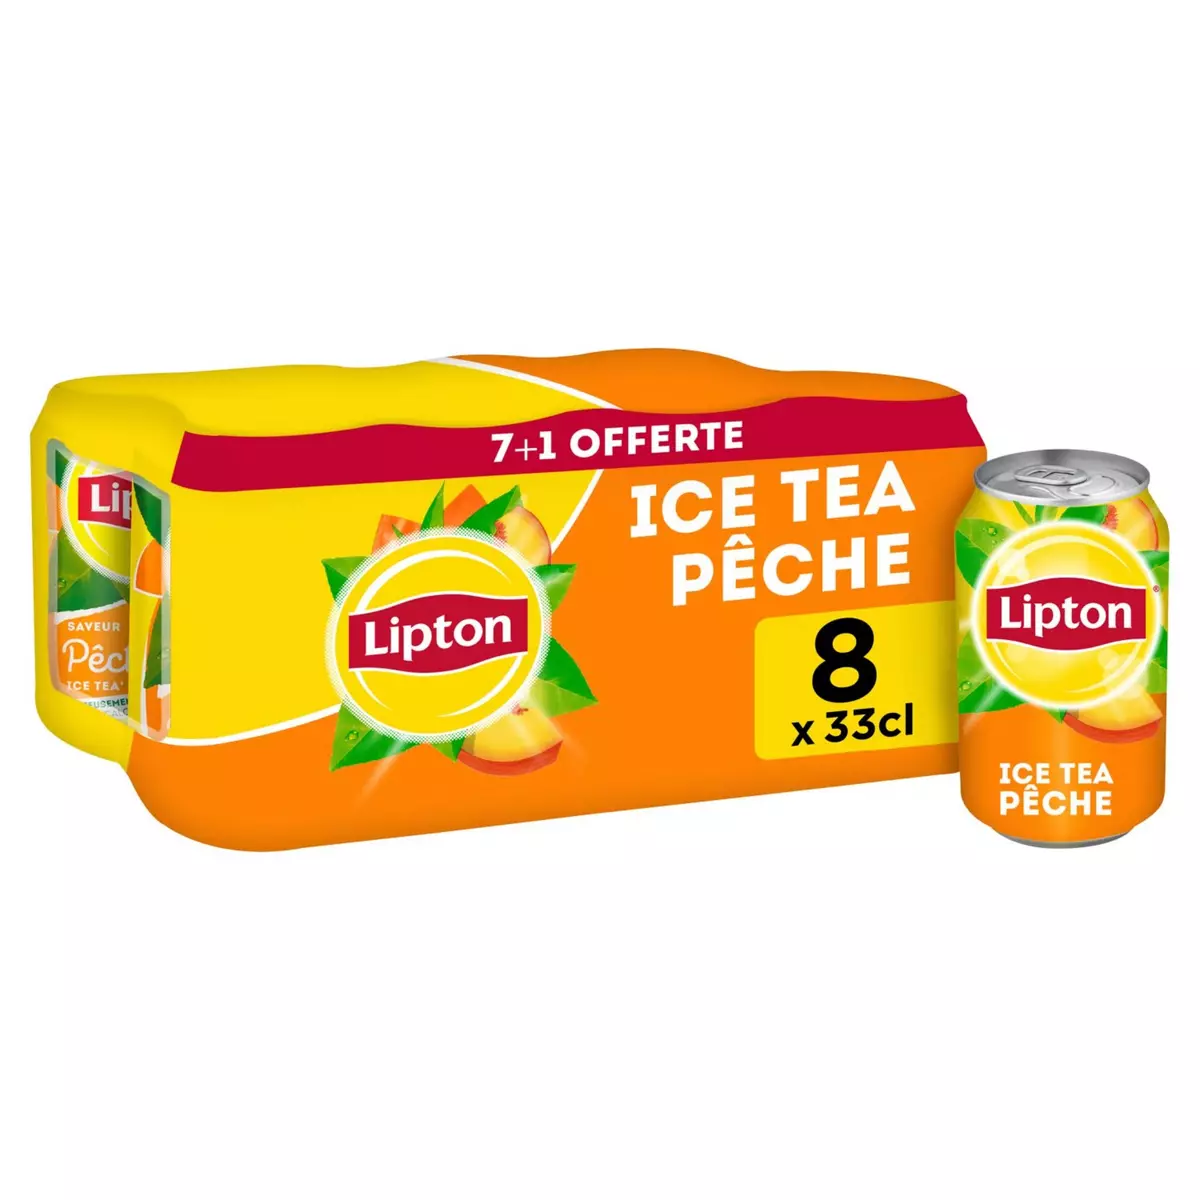 LIPTON Ice tea pêche 7+1 offerte 7x33cl +33cl